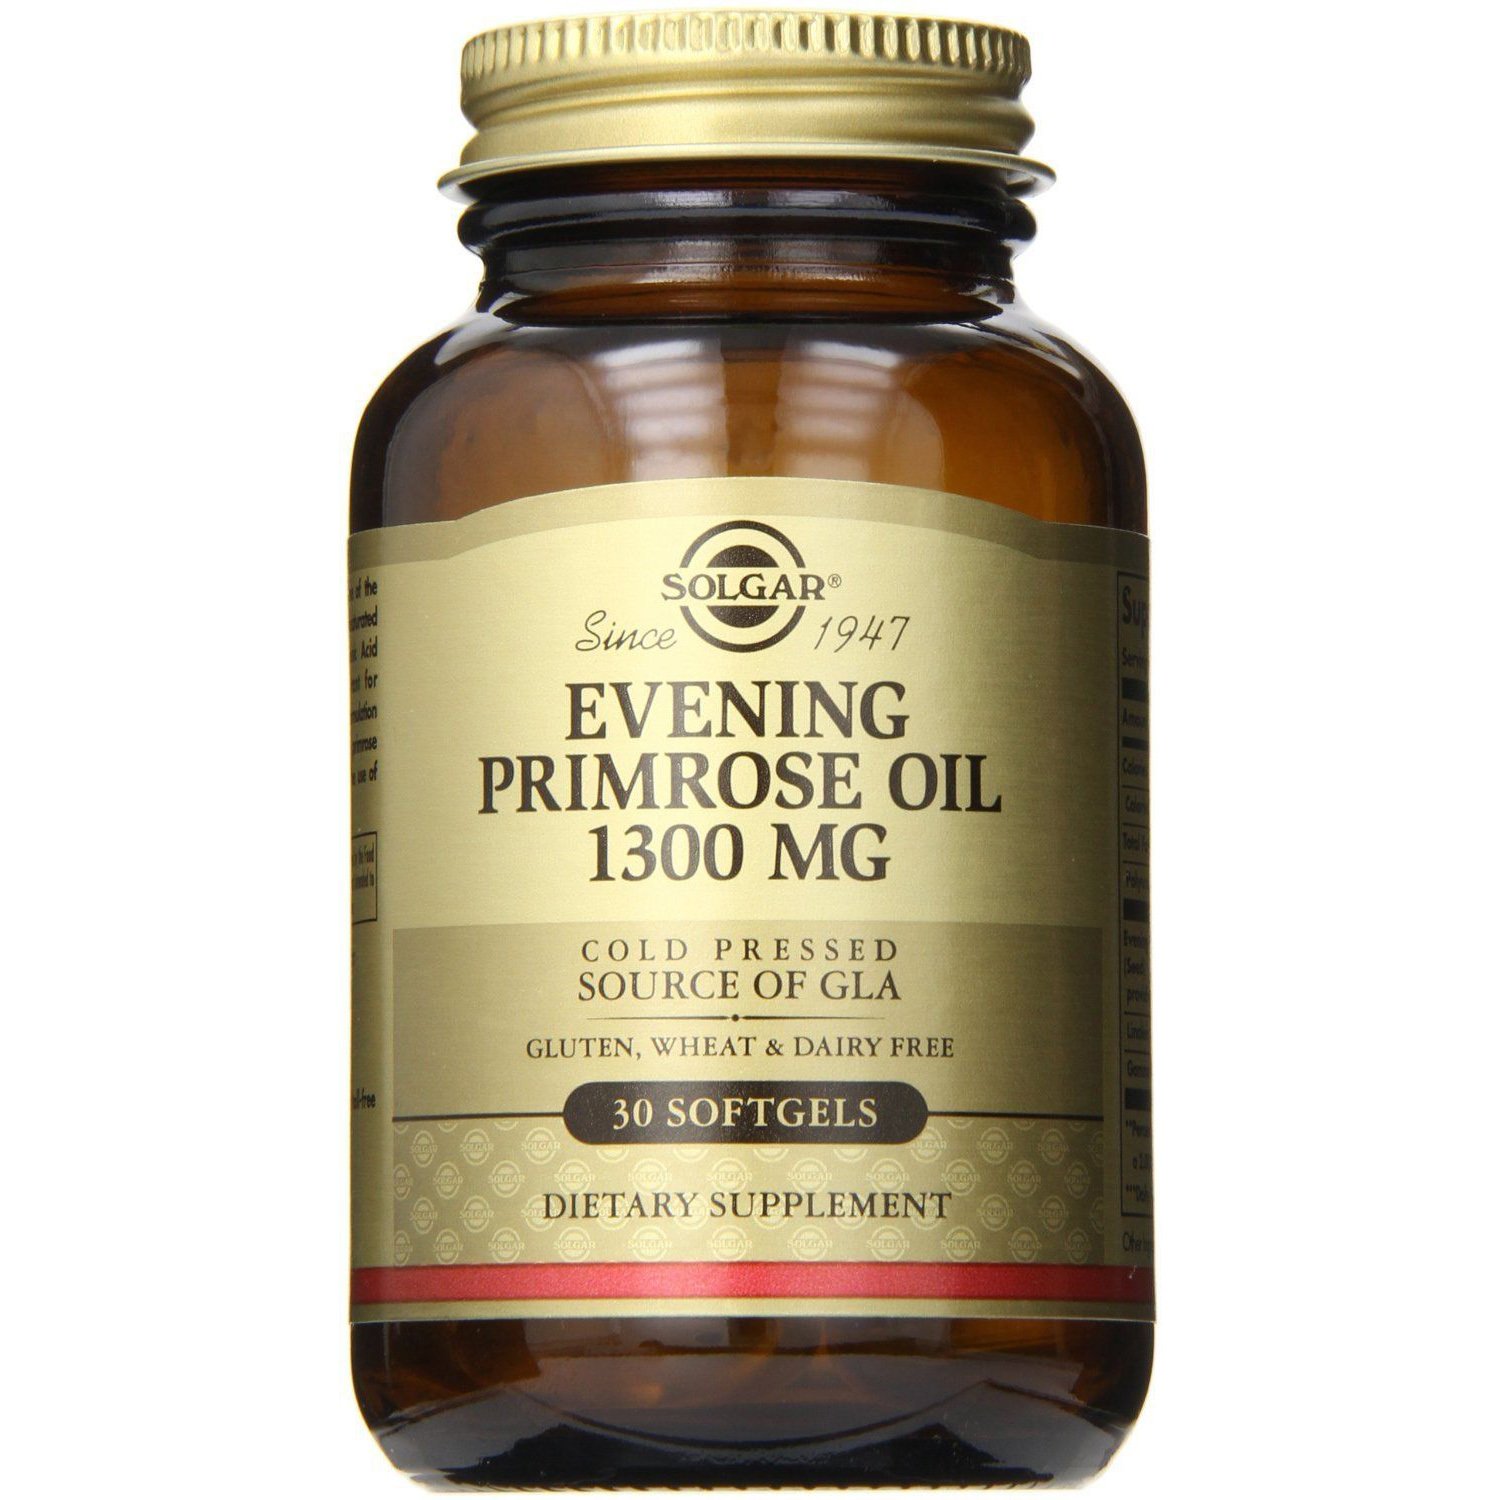 Solgar Evening Primrose Oil softgels – 1300mg 30softgels